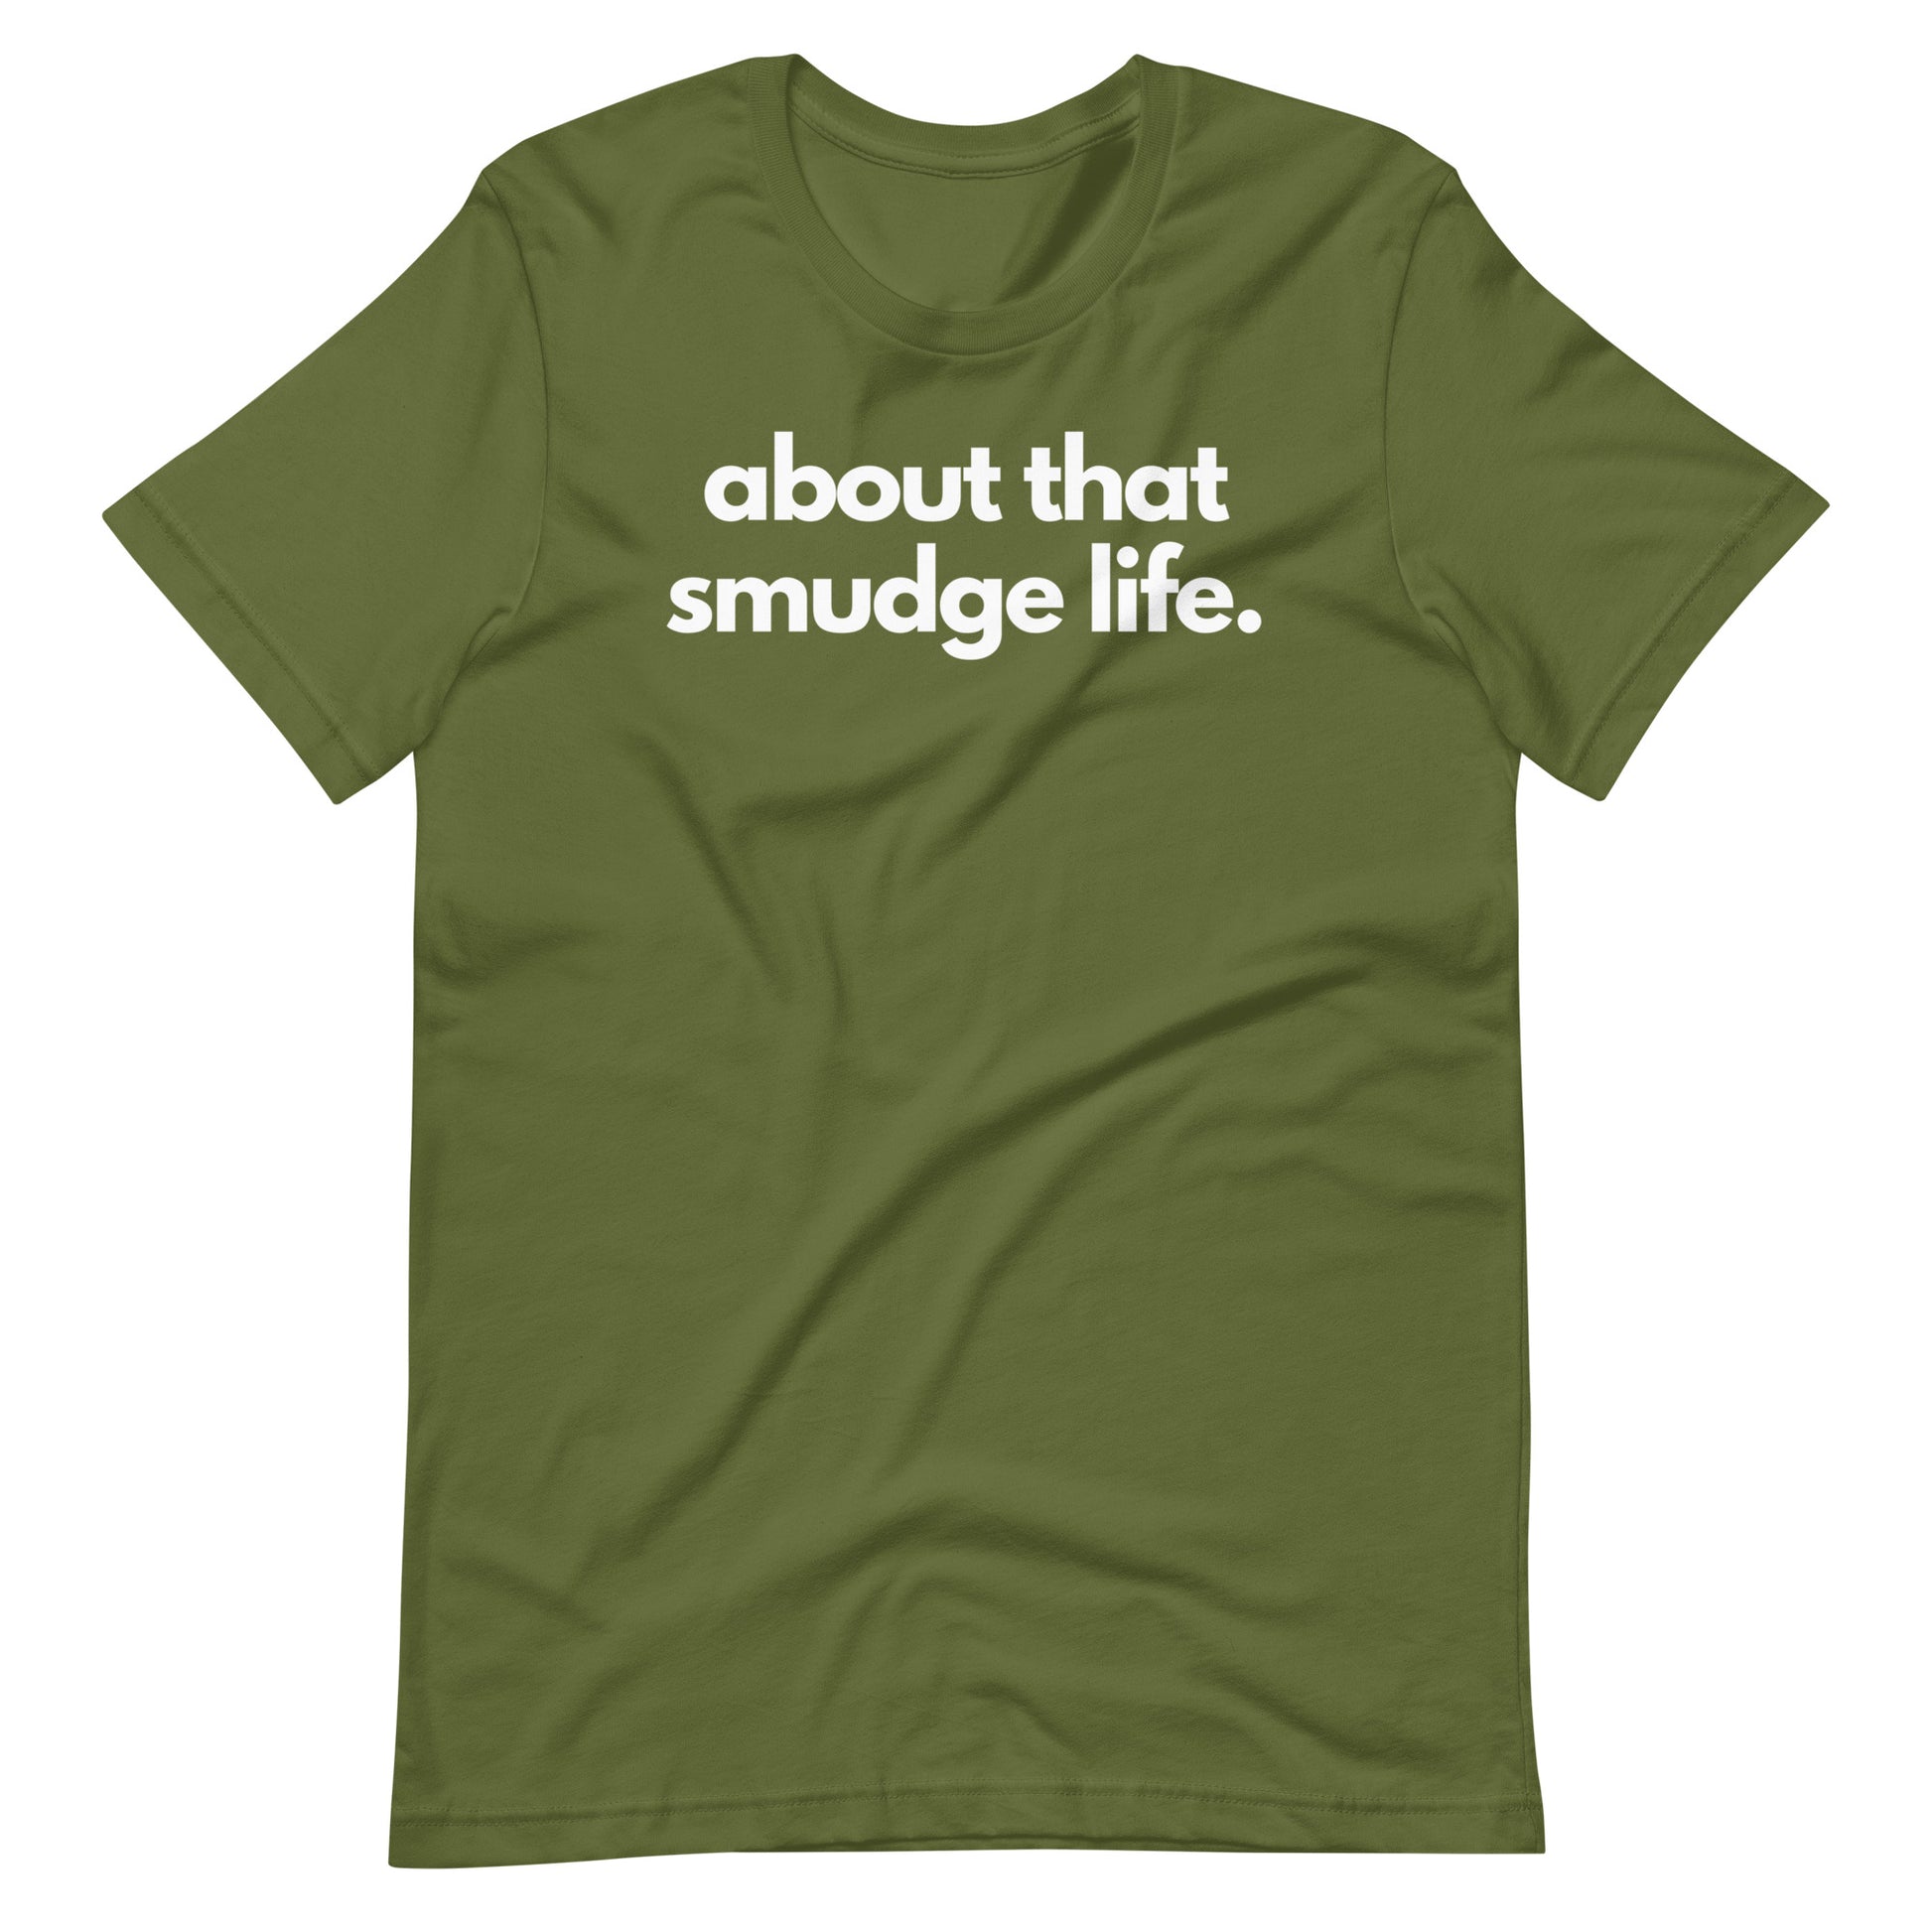 Sage for My Haters Shirt, Skeleton Sage Shirt, Funny Sage Shirt, Smudge  Shirt, Smudge Yourself Shirt, Funny Sage Tee, Skeleton Hands Shirt 